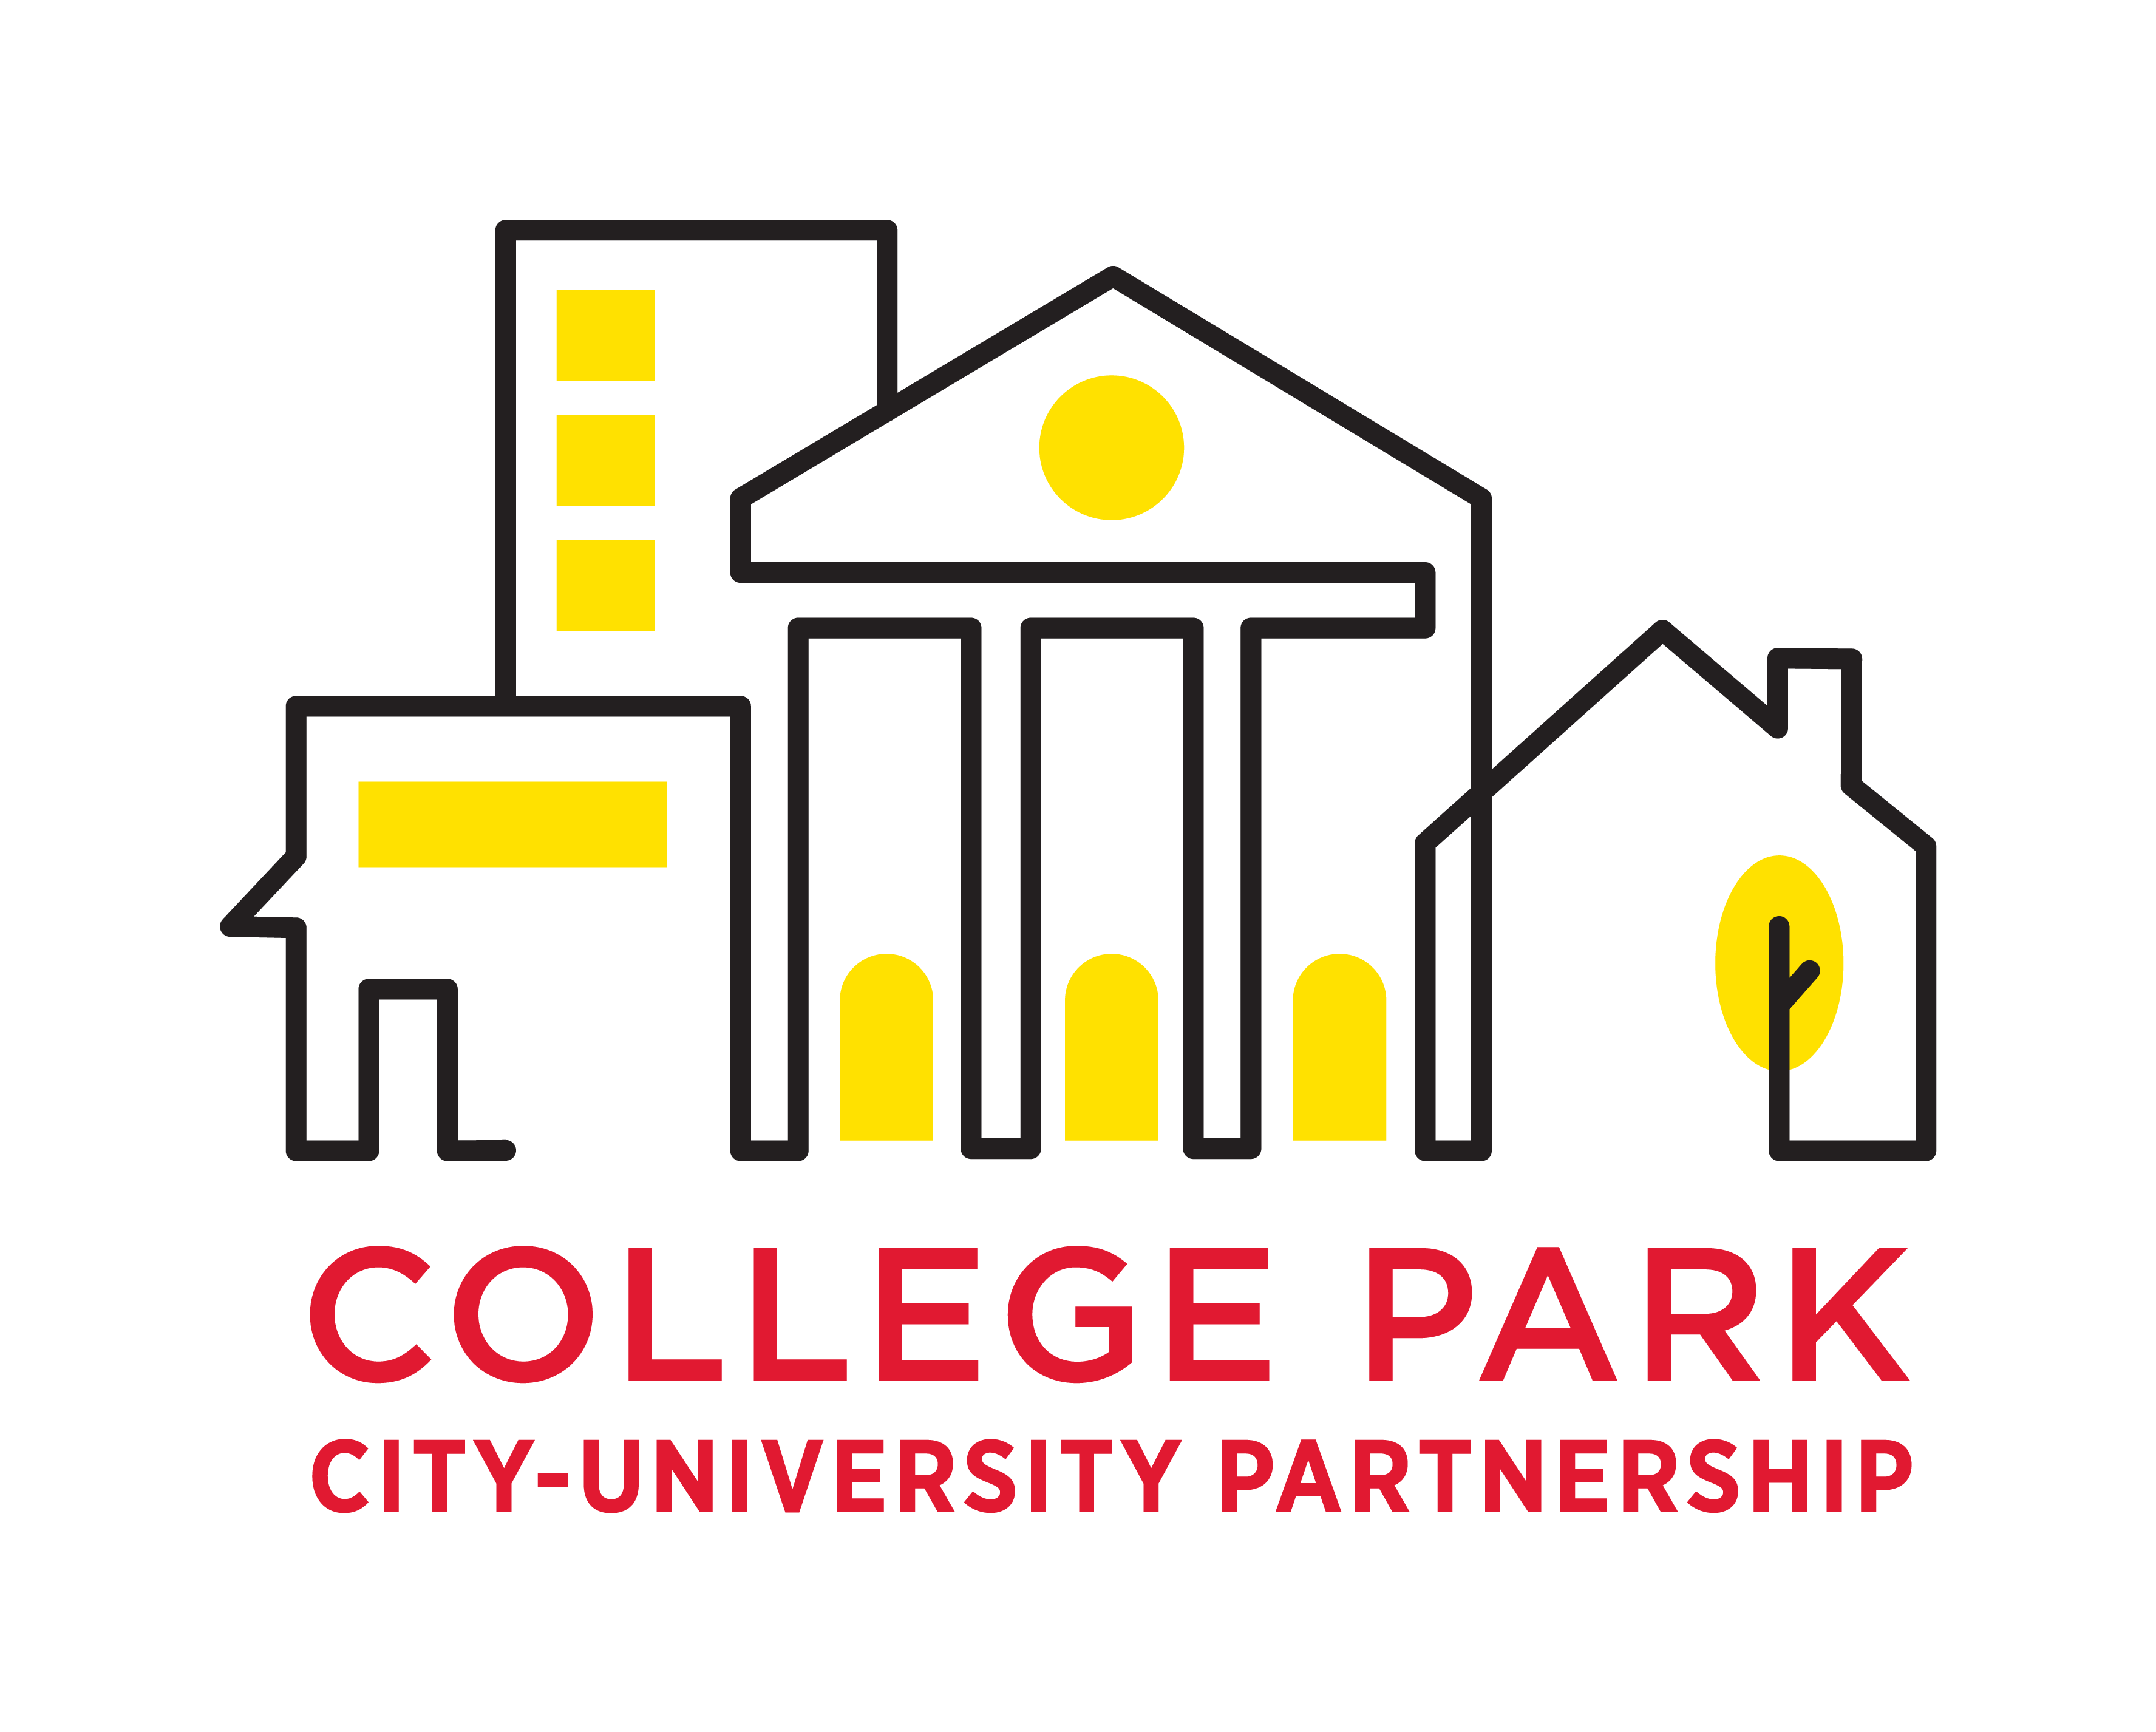 College Park City-University Partnership